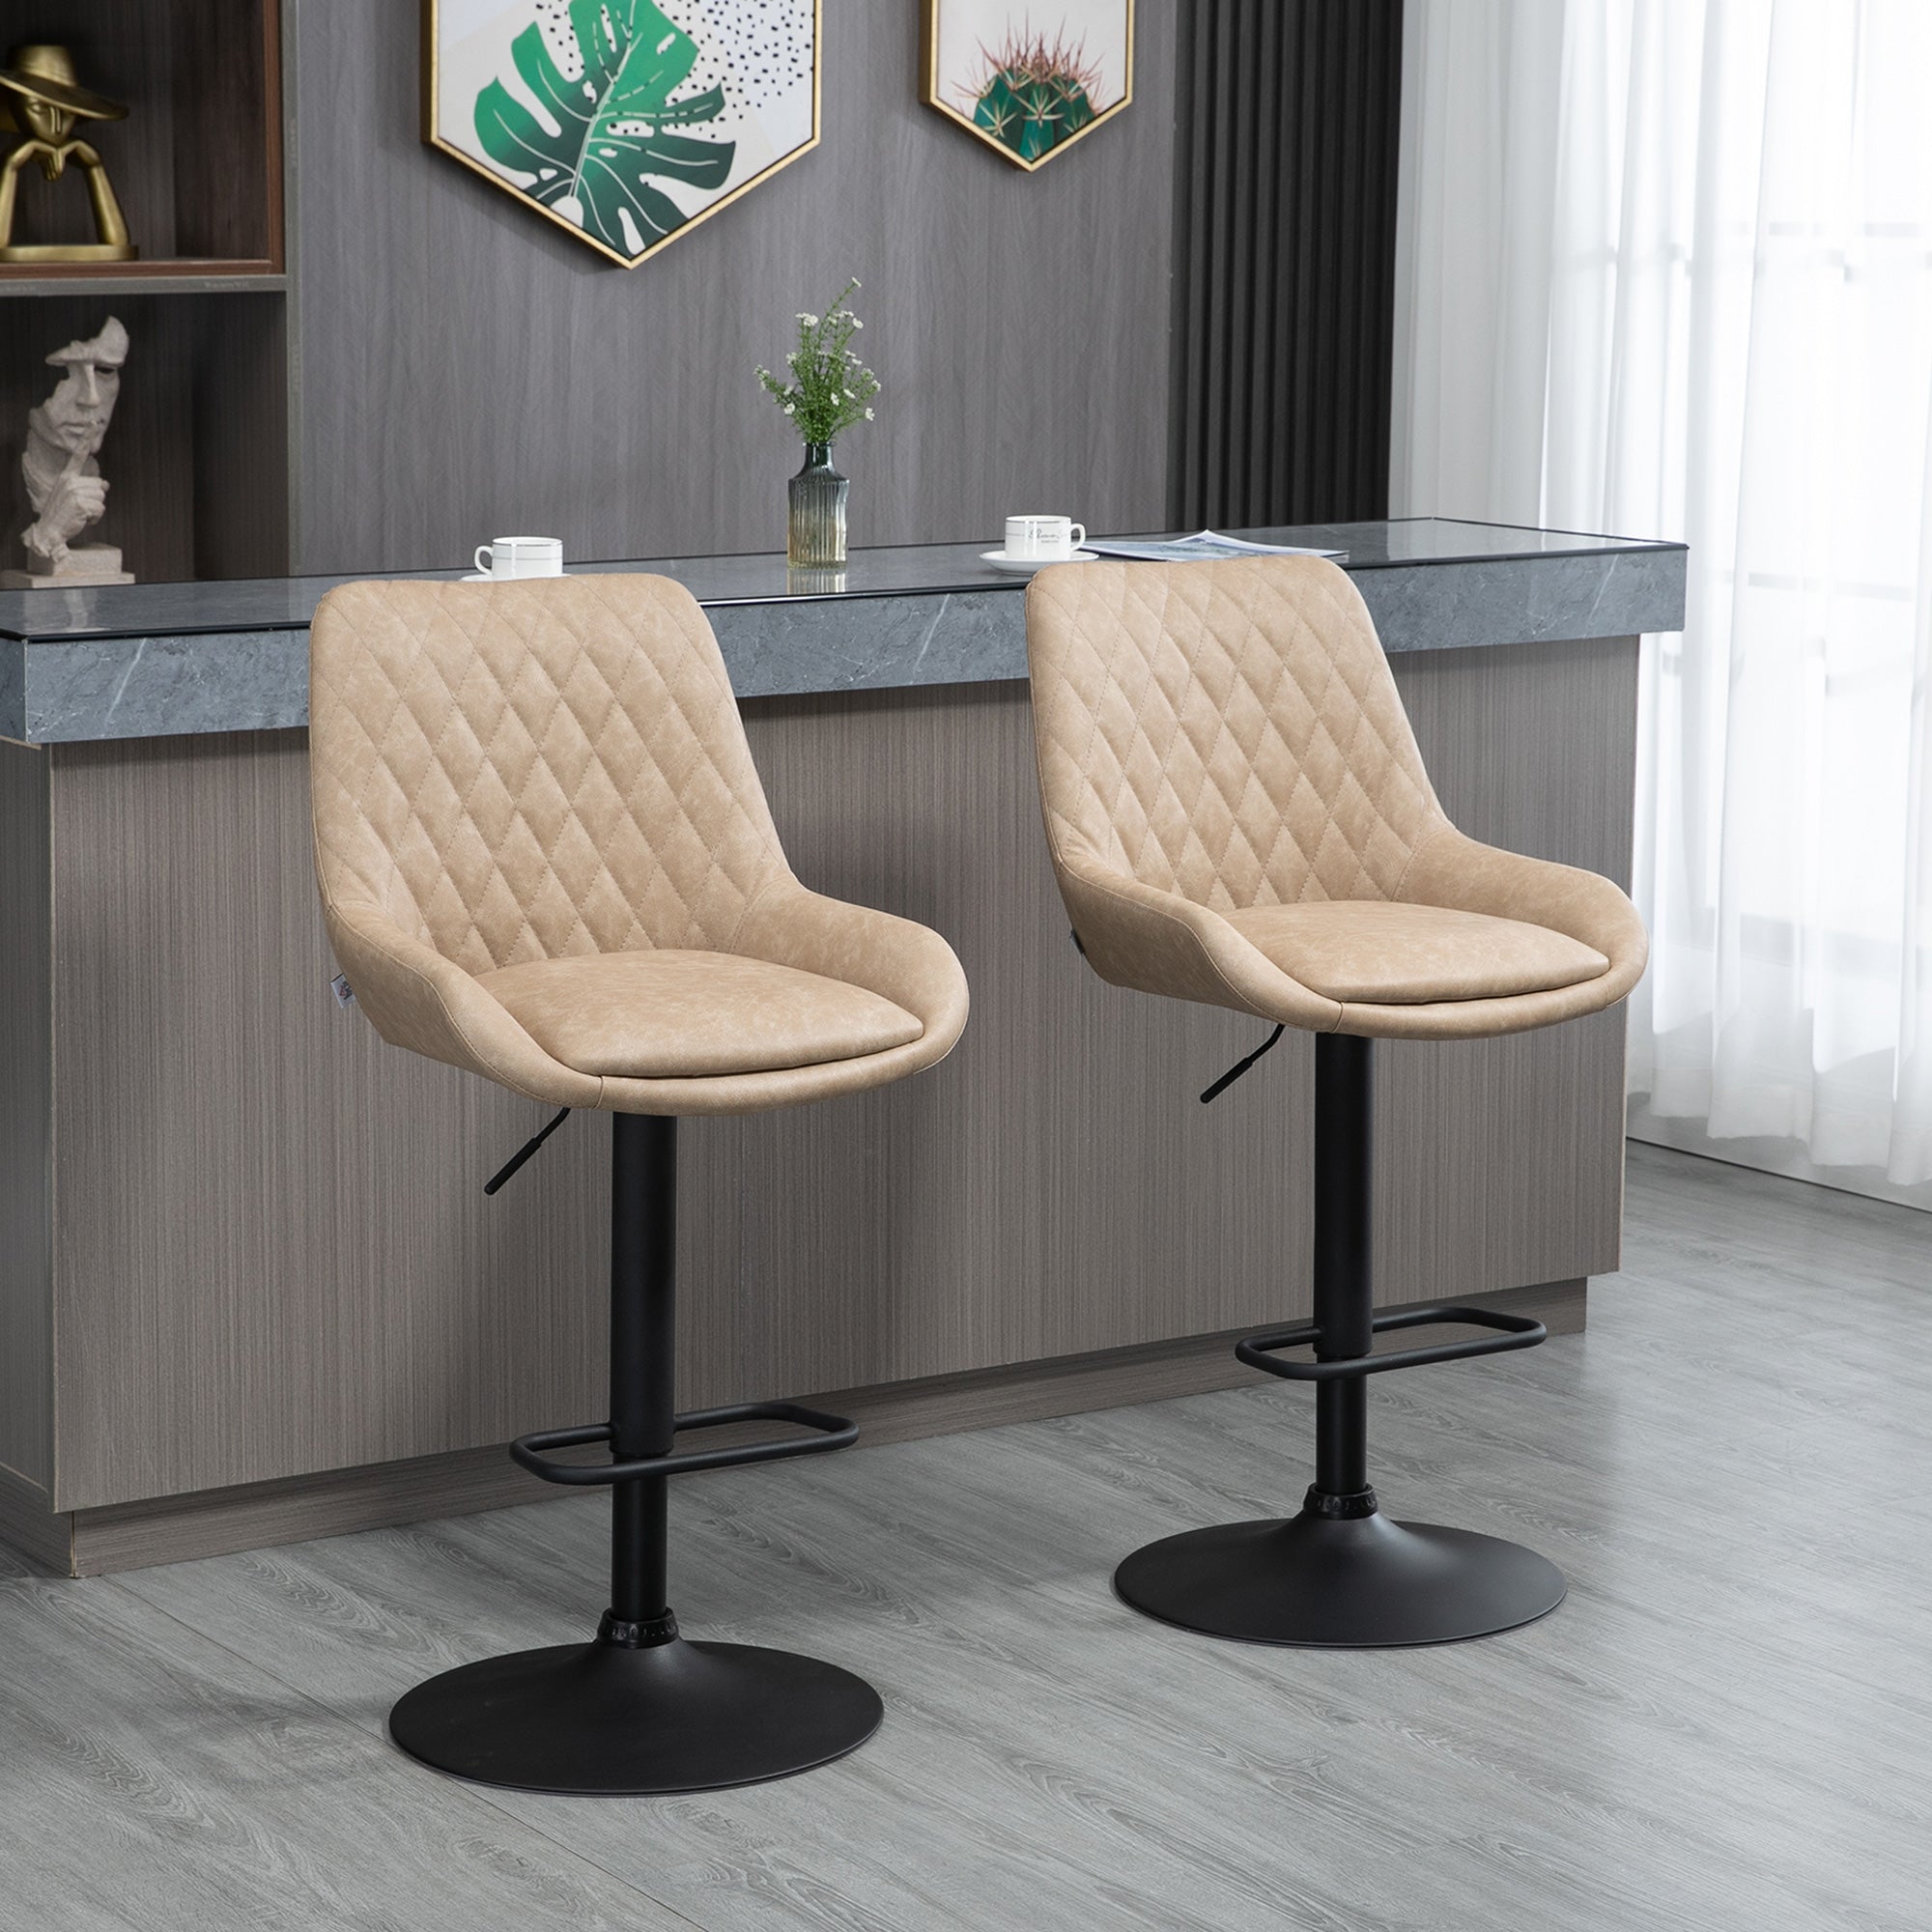 Retro Bar Stools Set of 2, Adjustable Kitchen Stool, Upholstered Bar Chairs with Back, Swivel Seat, Light Khaki  AOSOM   